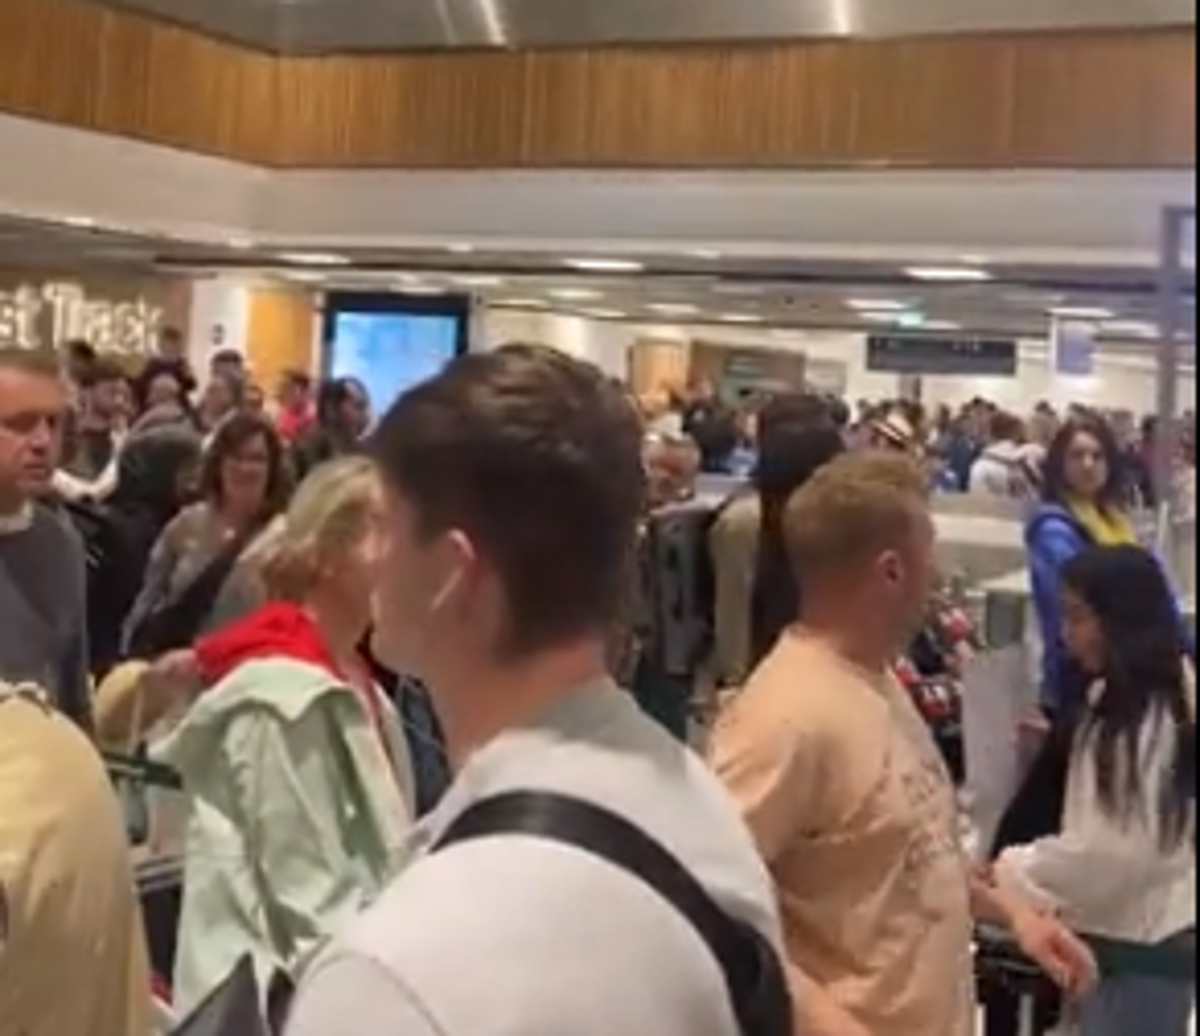 More easyJet flights cancelled as Dublin airport queues continue – follow live